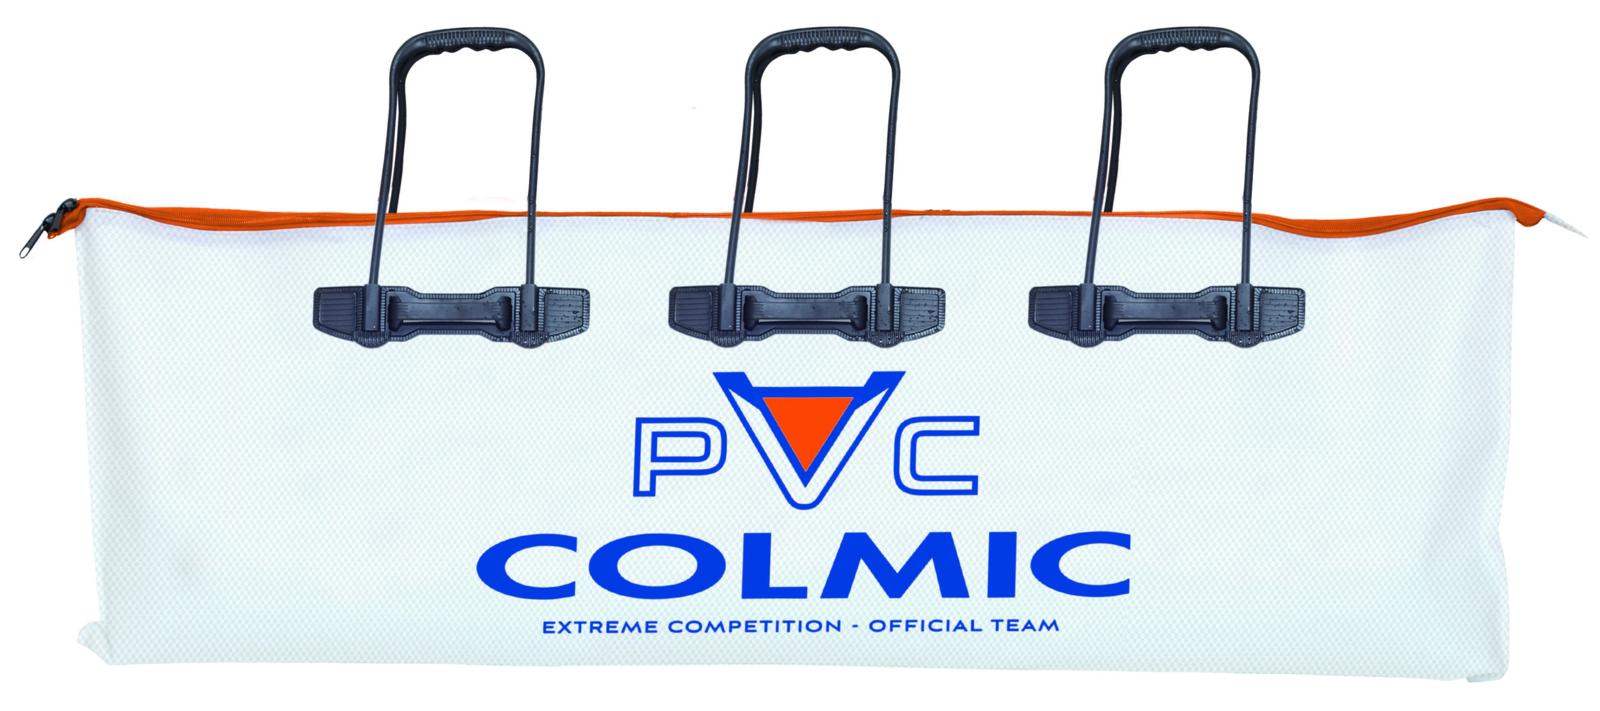 colmic PVC: ACQUARIO XL BOXEVA311.jpg